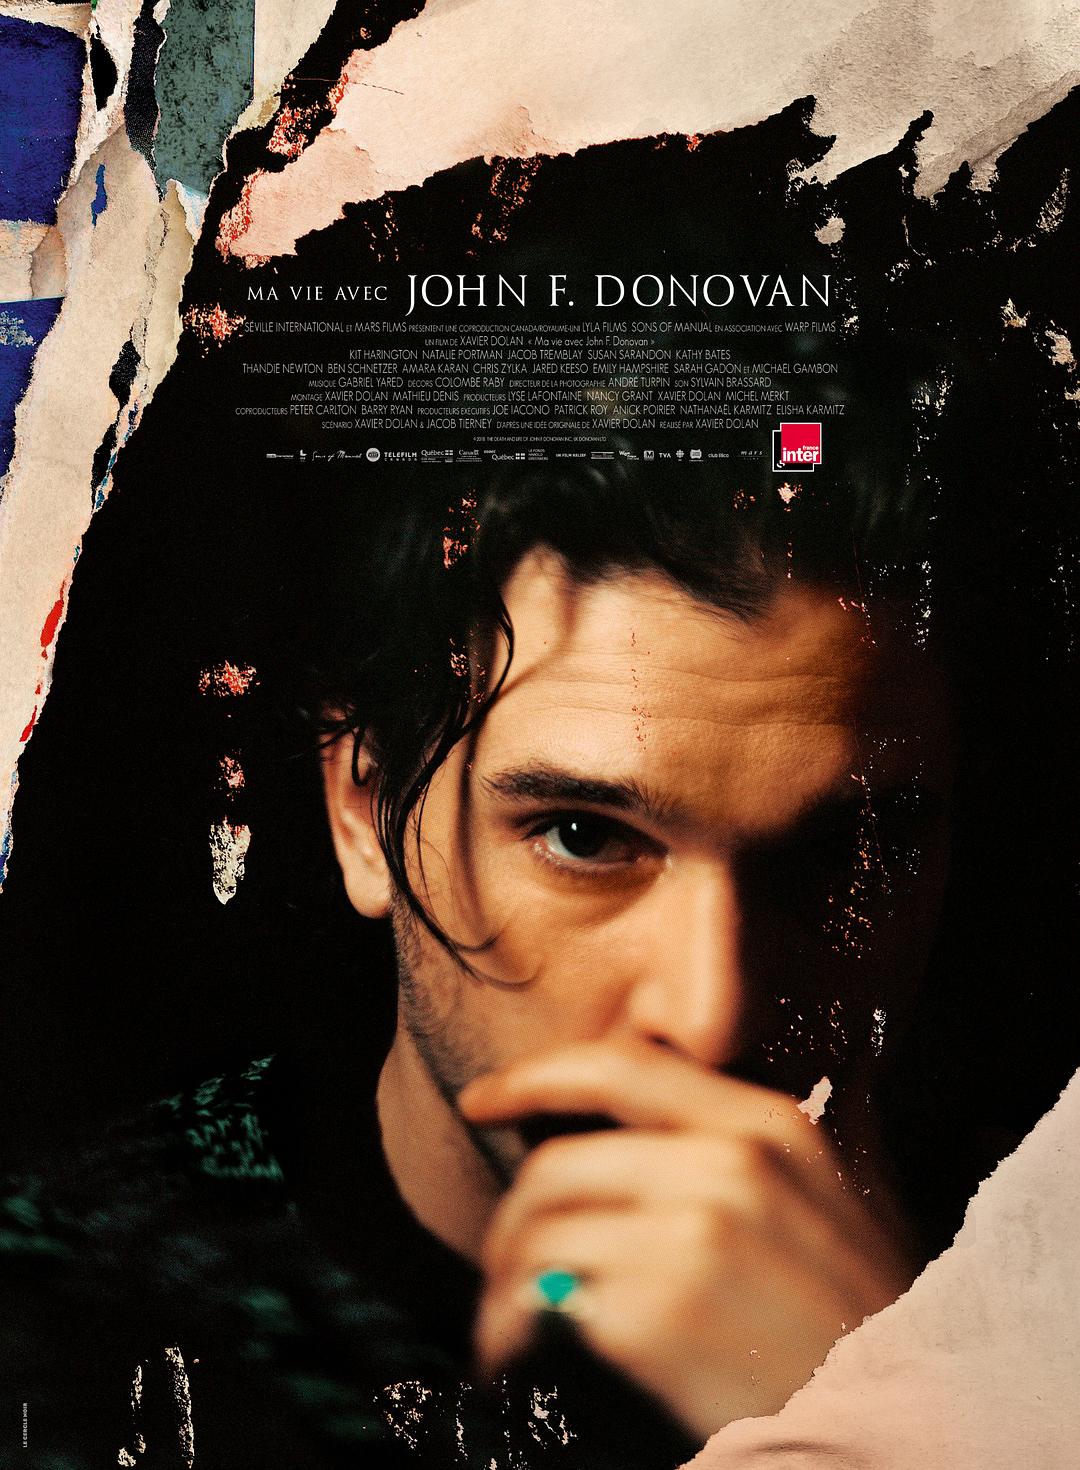 约翰·多诺万的死与生/多诺万师长的生与死 The.Death.and.Life.of.John.F.Donovan.2018.1080p.BluRay.AVC.DTS-HD.MA.5.1-RAiEBLEUE 37.51GB-1.png